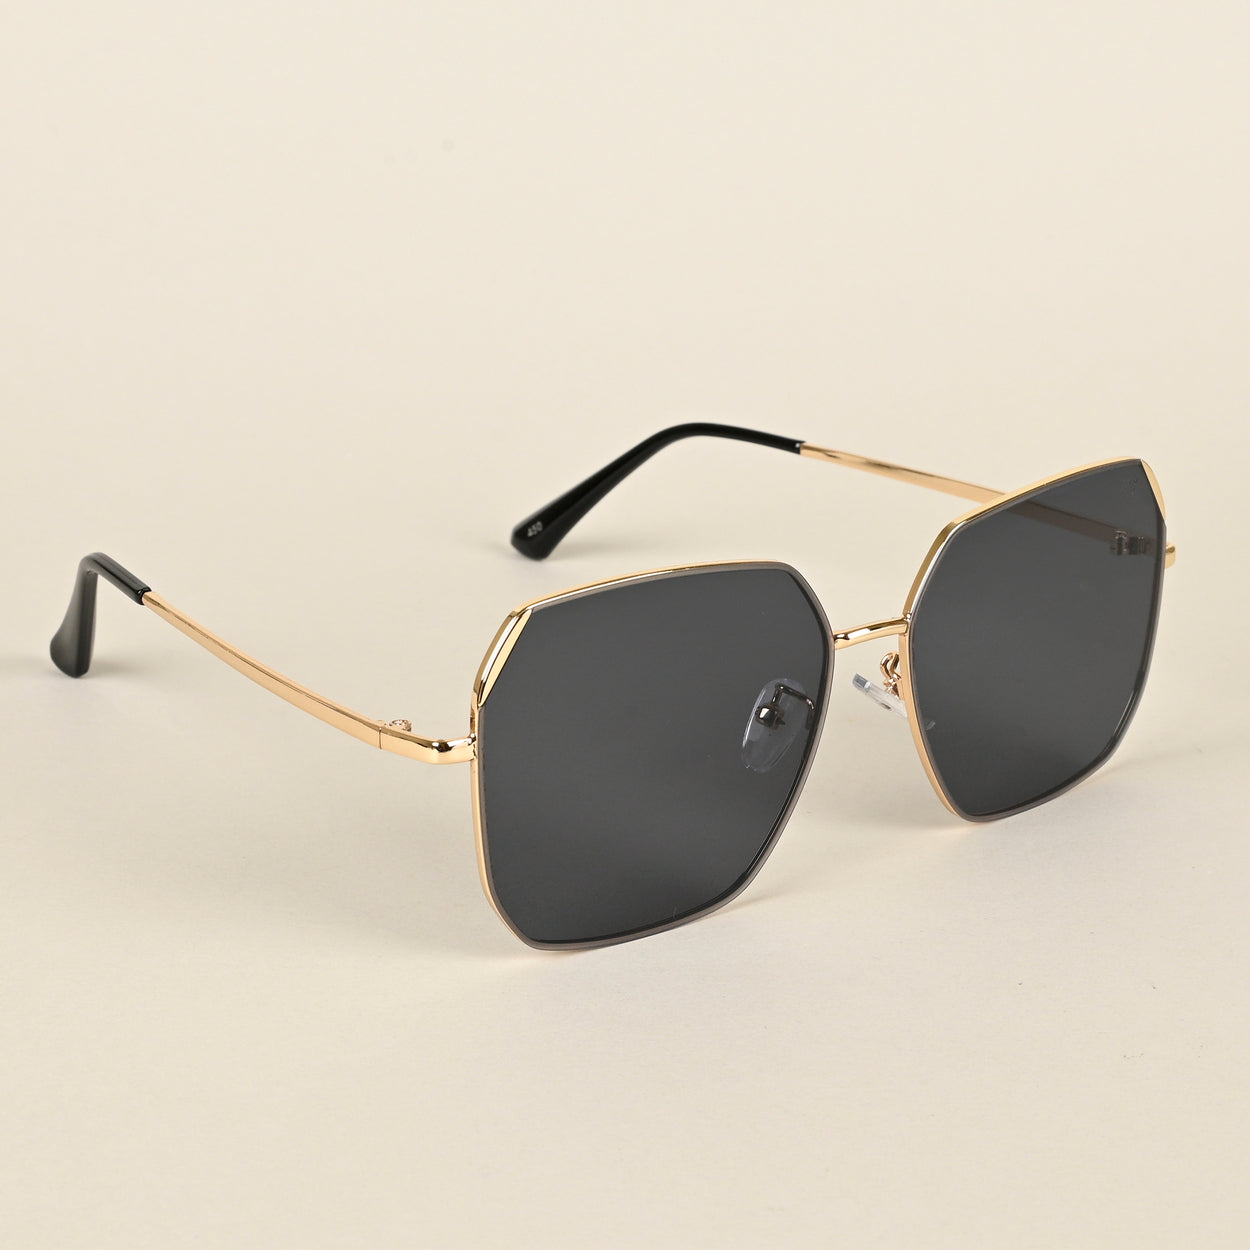 Voyage Black Square Sunglasses for Men & Women (450MG4337)